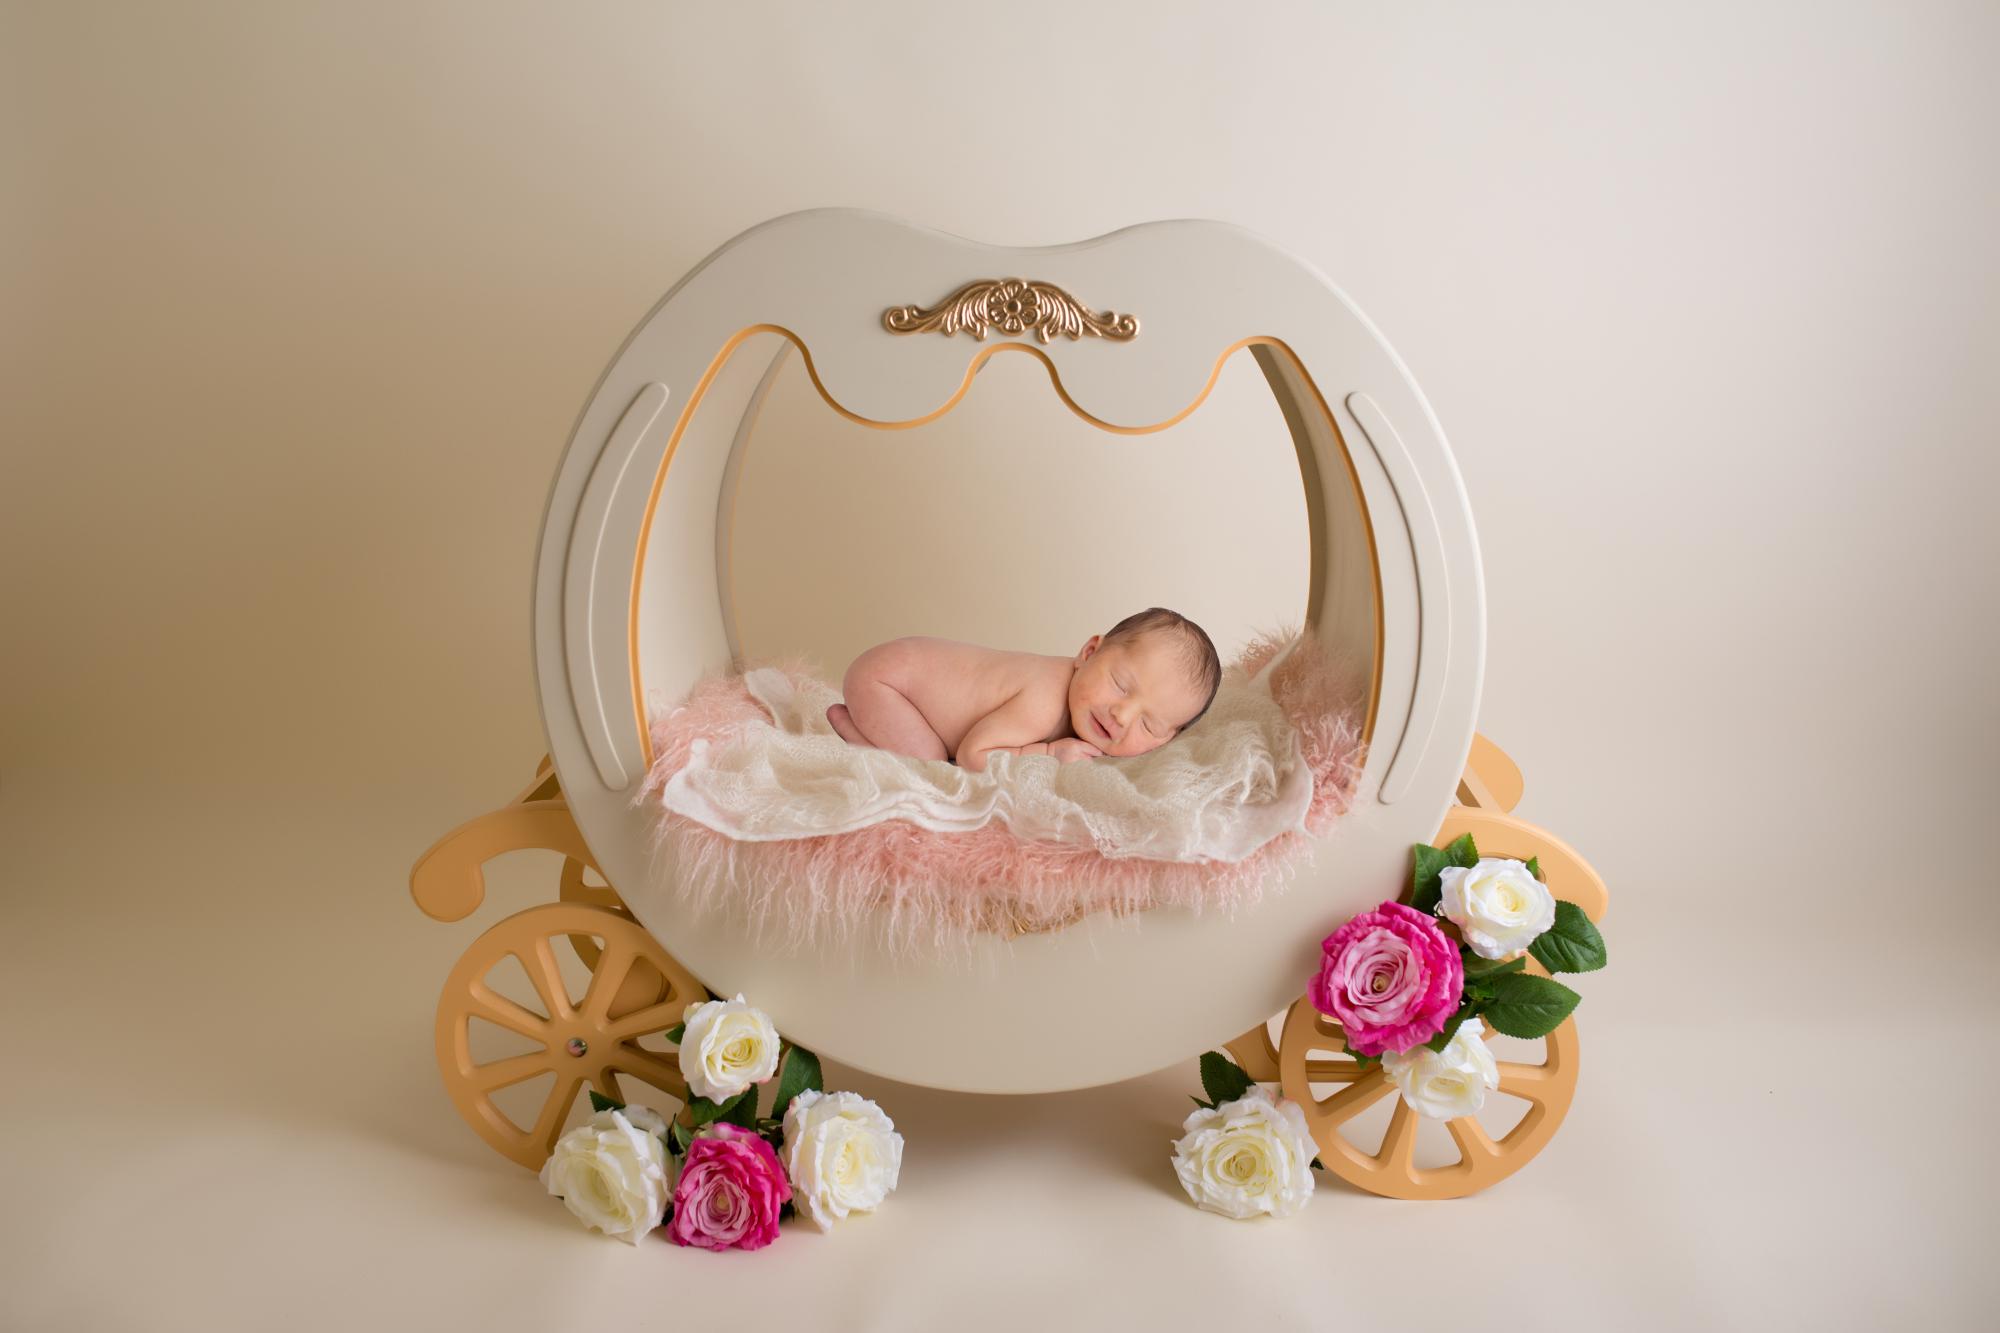 princess carriage with newborn baby